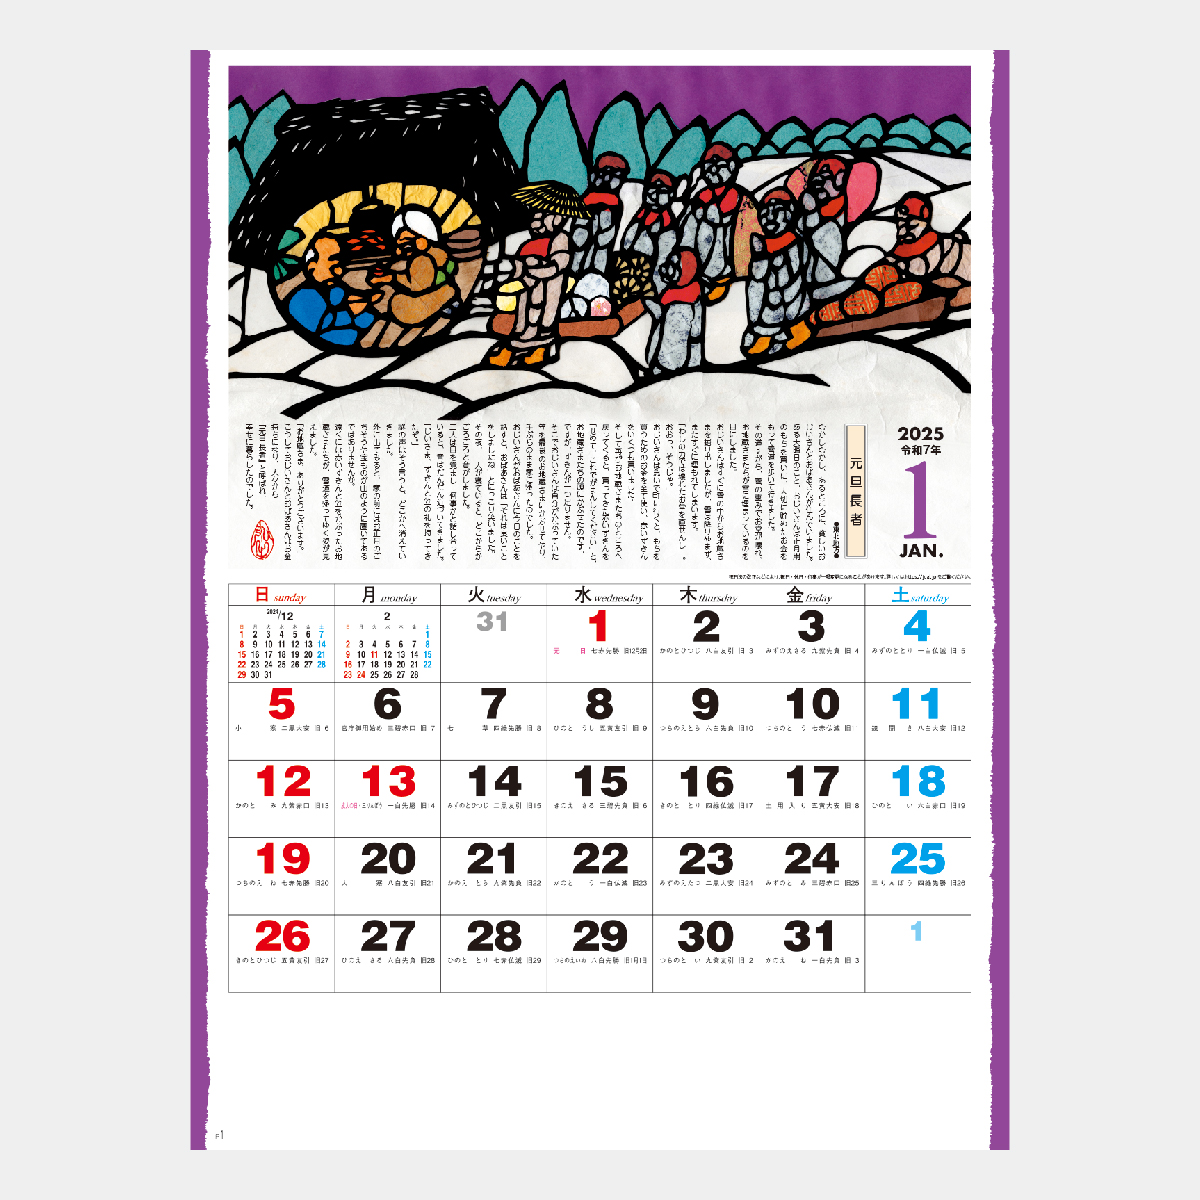 Nc 16 日本昔話 21年版名入れカレンダーを格安で販売 名入れカレンダー印刷 Com